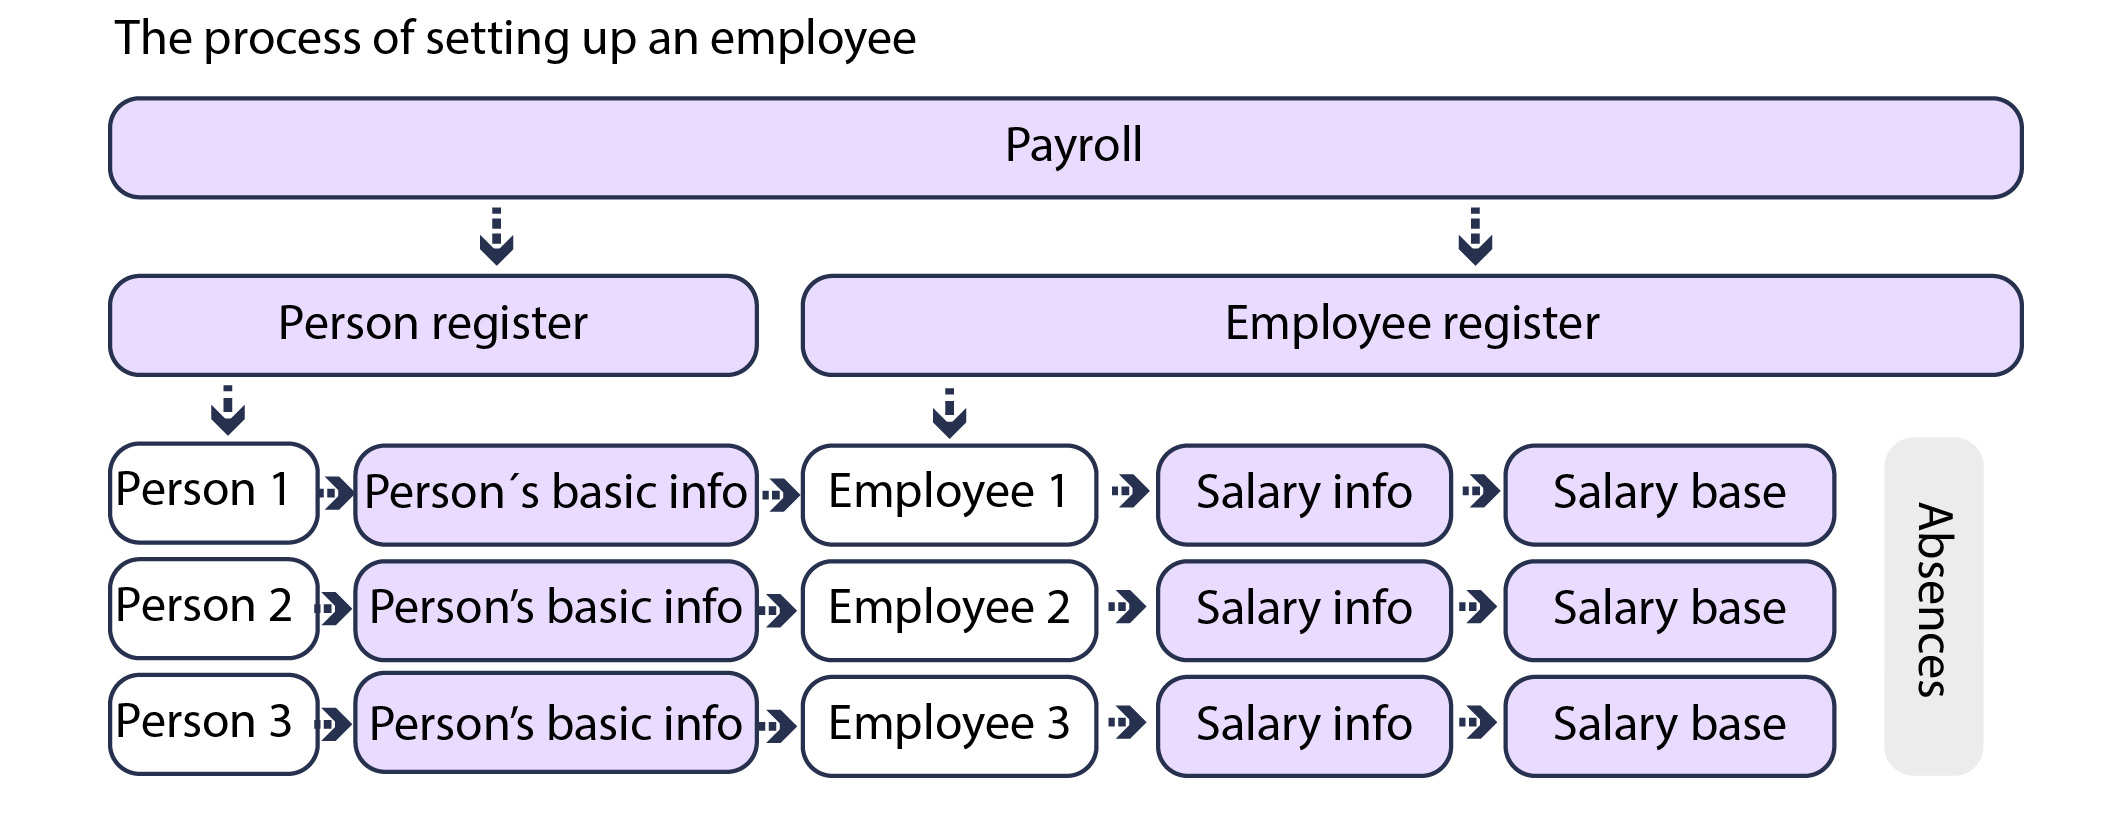 palkanlaskennan_prosessi_en_the_process_of_setting_up_an_employee_en.jpg